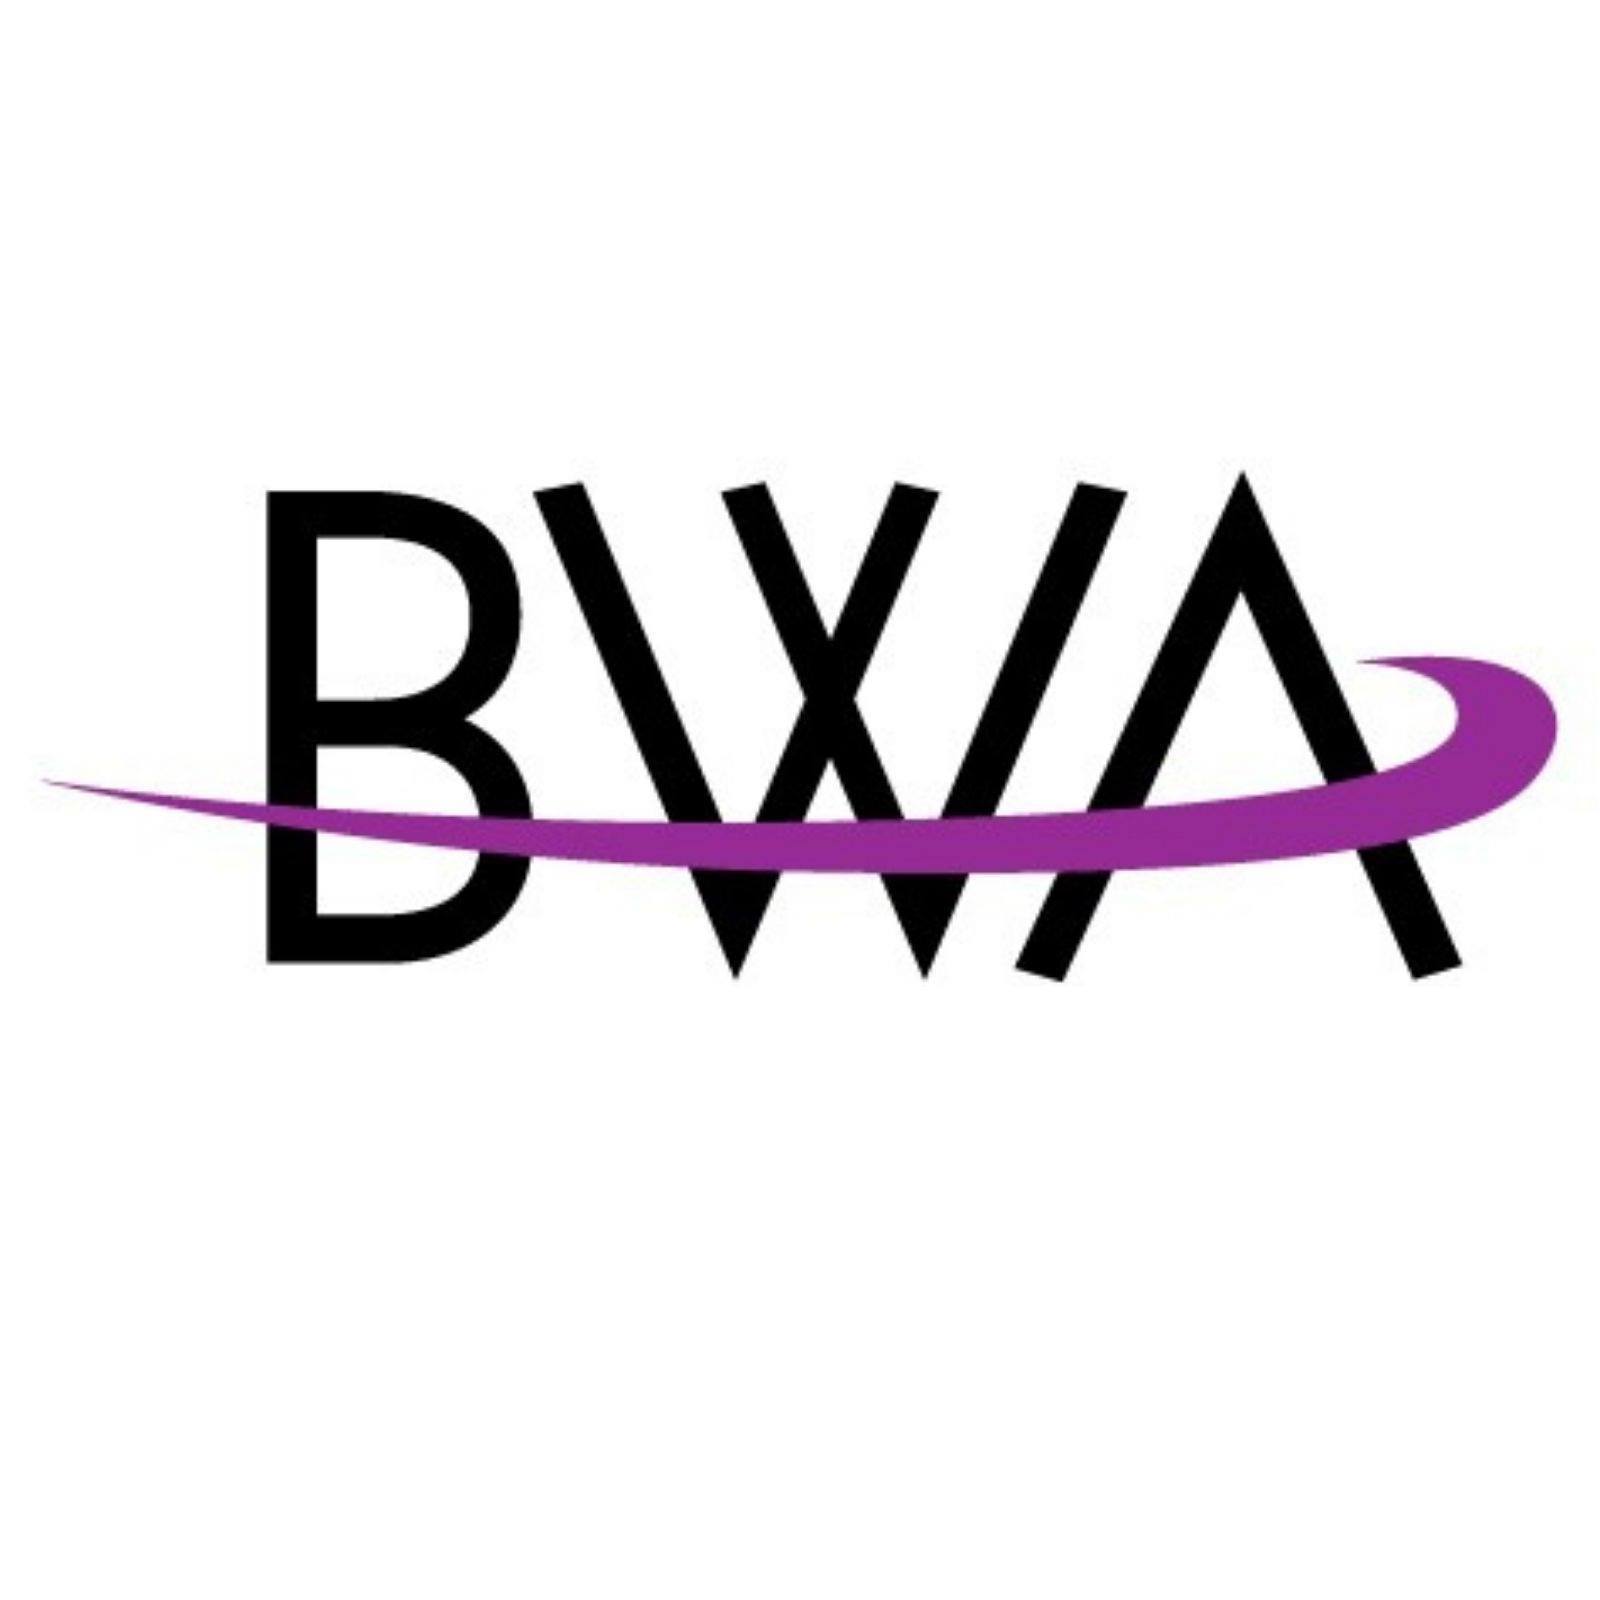 Woman Organization in Florida - Broward Women's Alliance